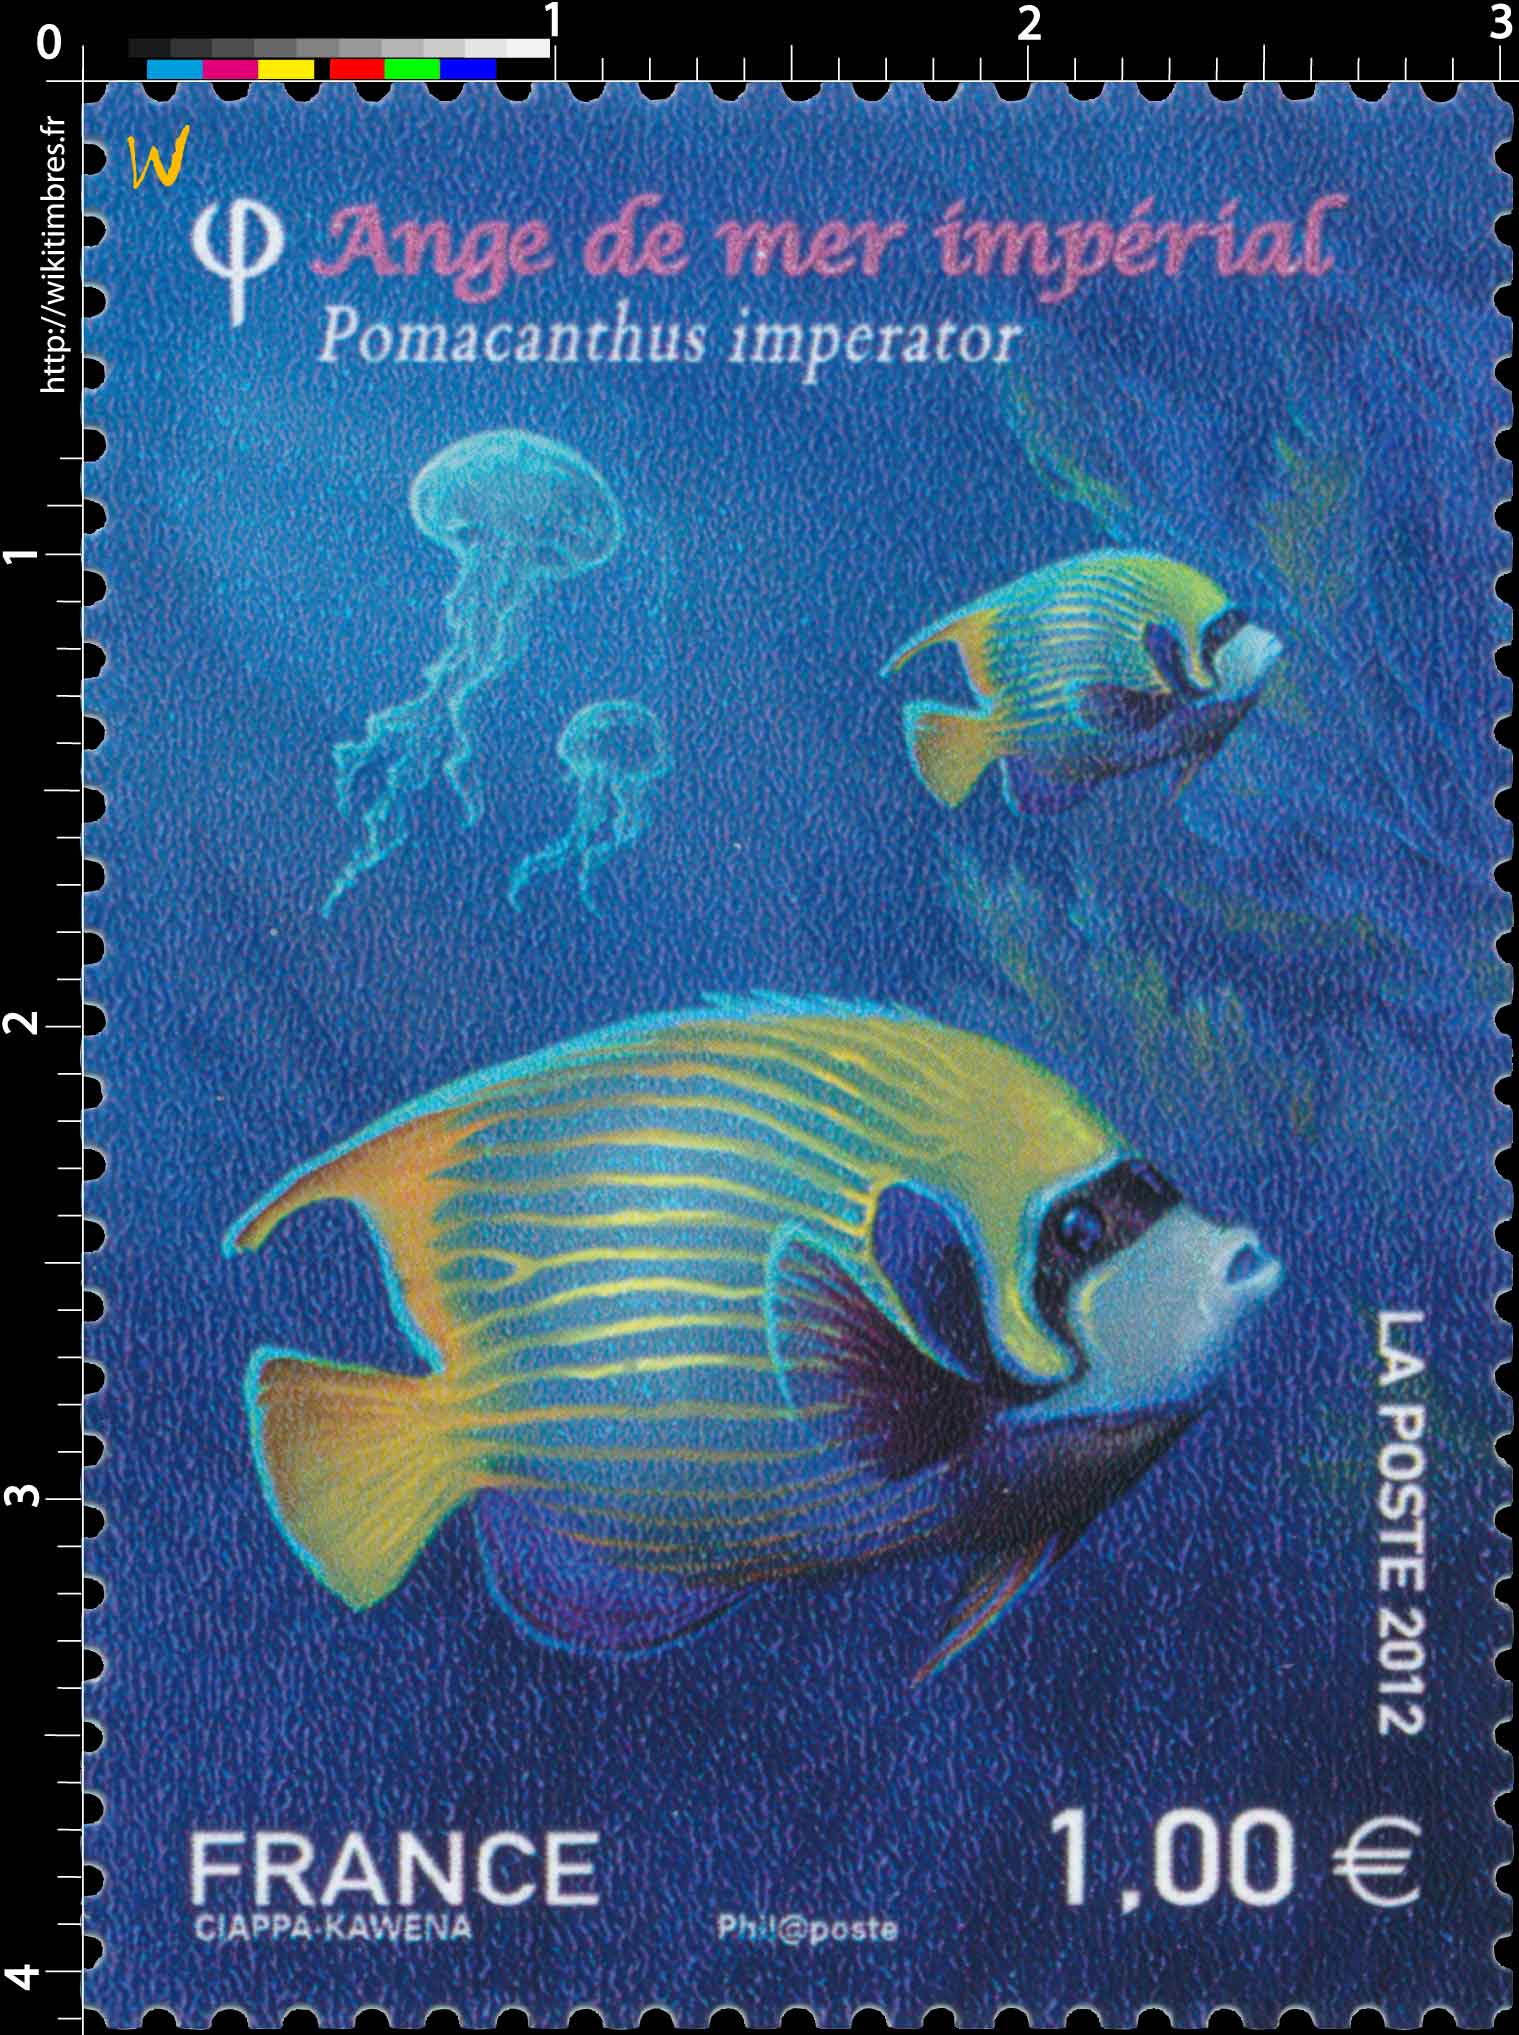 2012 l'ange de mer impérial pomacanthus imperator